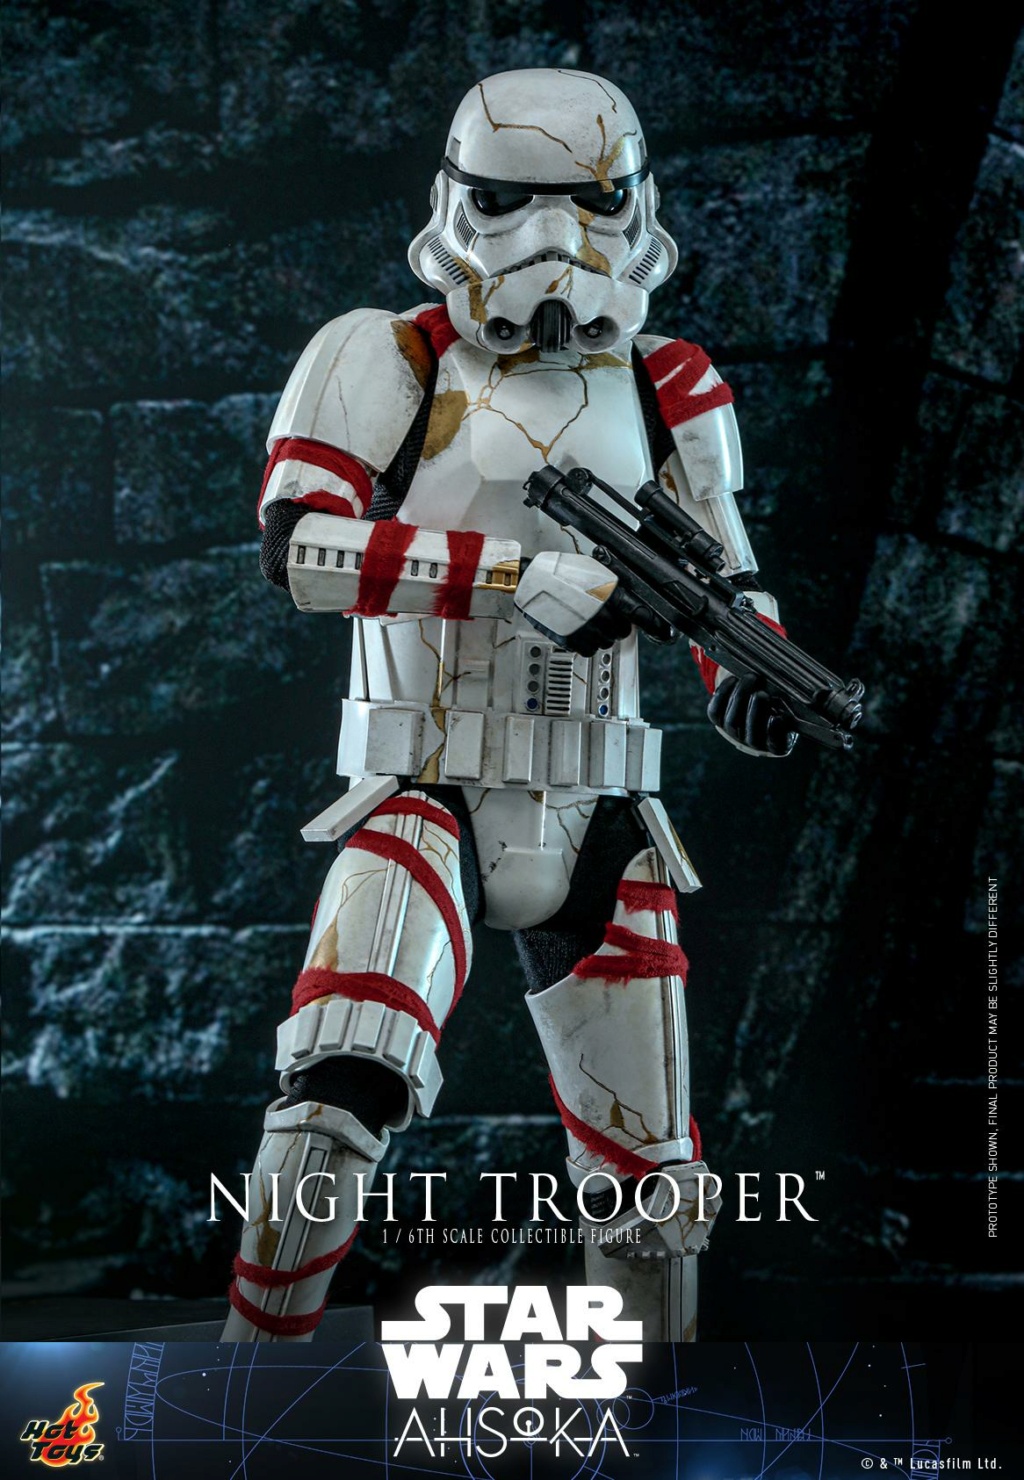 Star Wars: Ahsoka - 1/6th scale Night Trooper Collectible Figure - Hot Toys Night_19